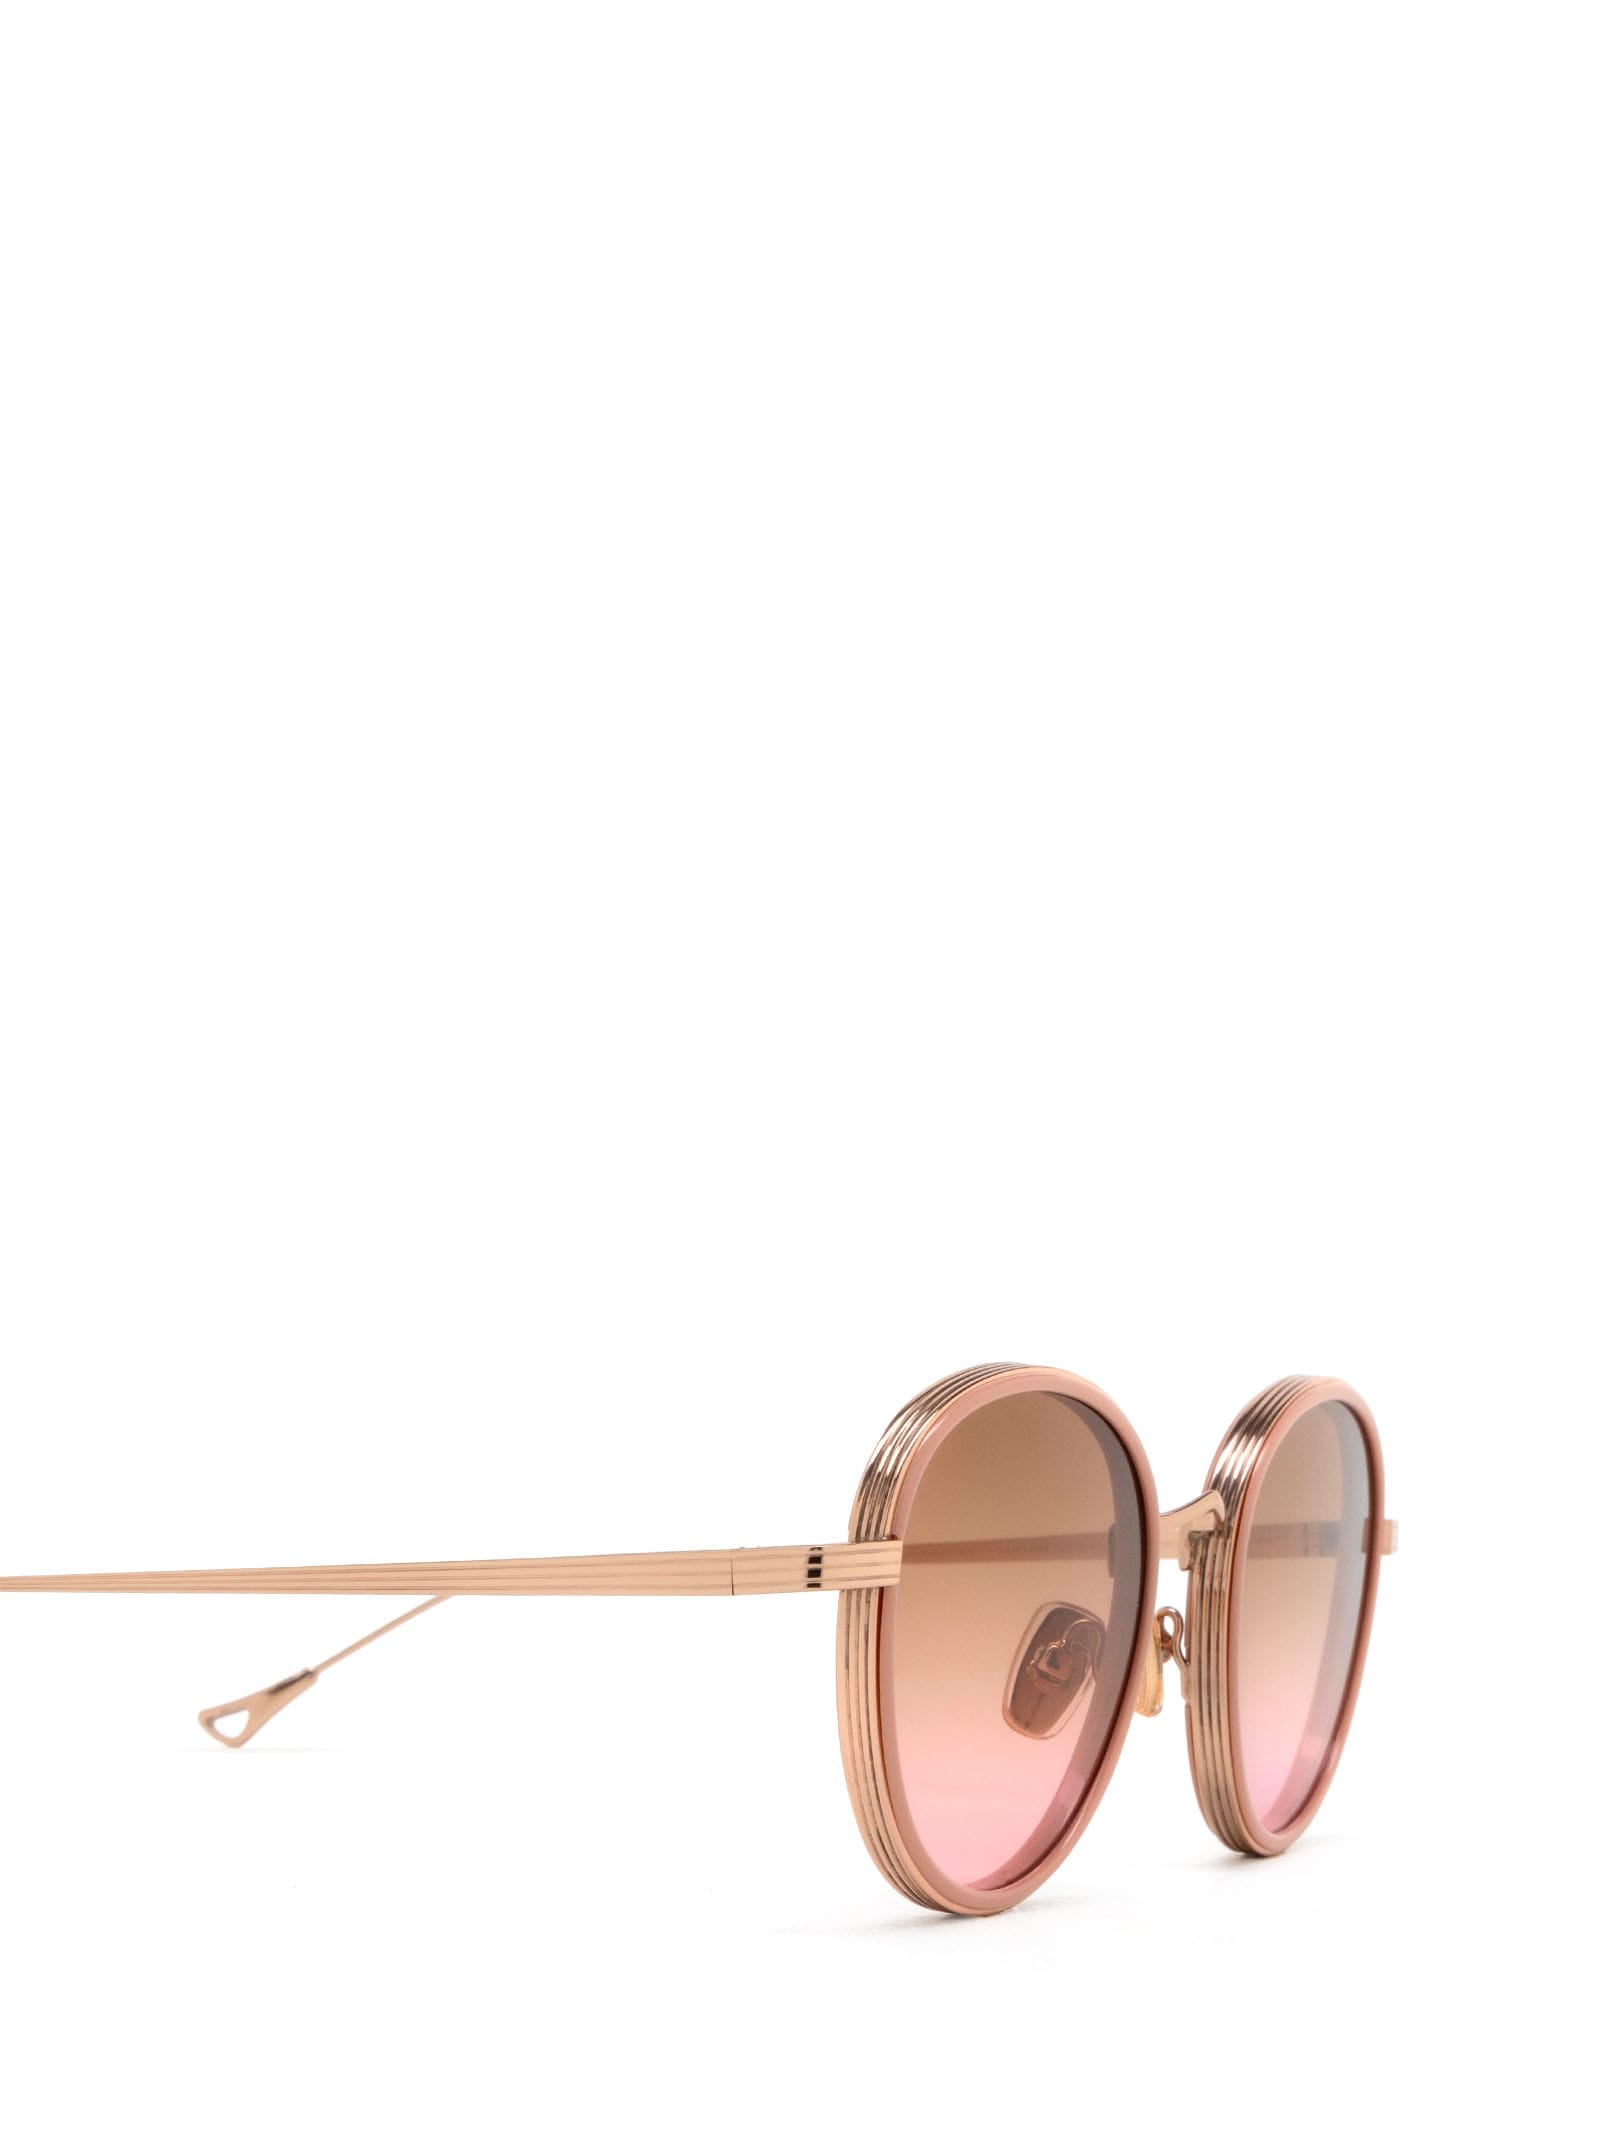 Shop Eyepetizer Flame Vintage Rose Sunglasses